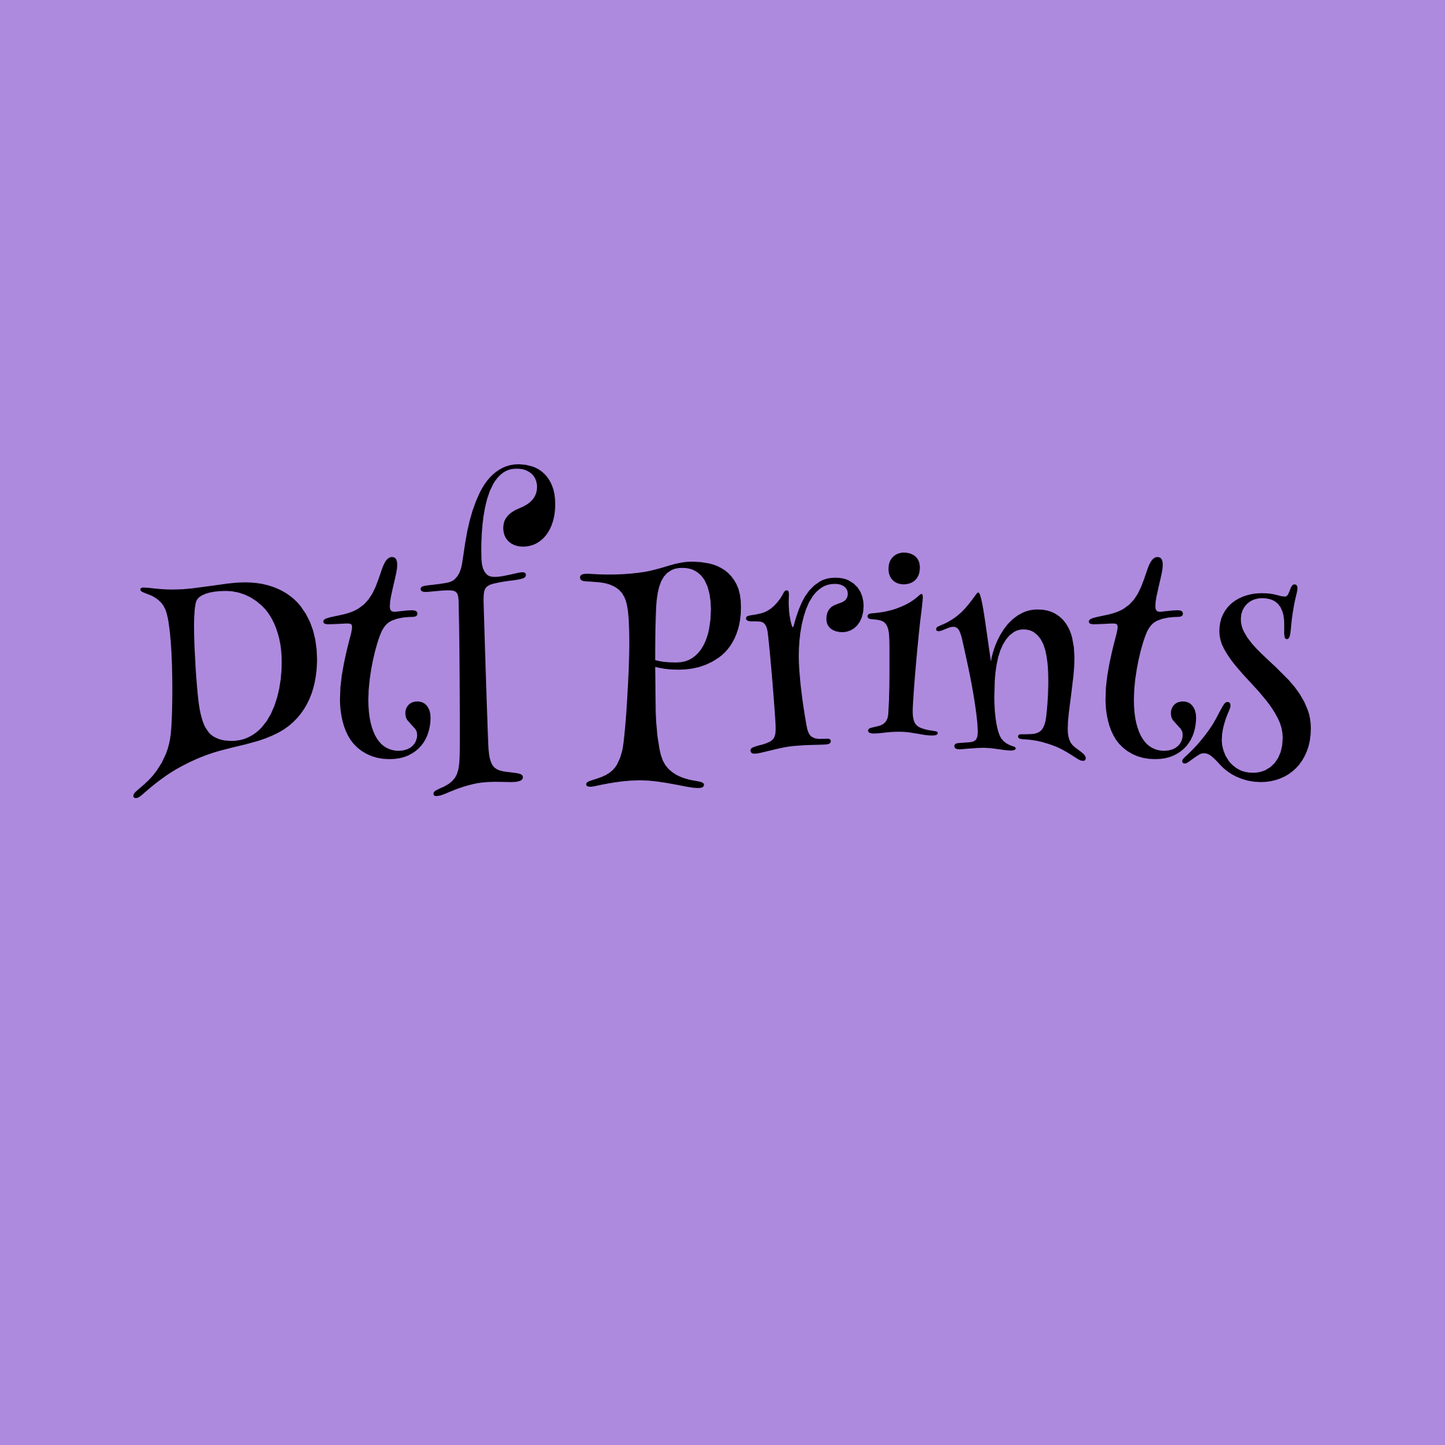 Dey’s dtf prints